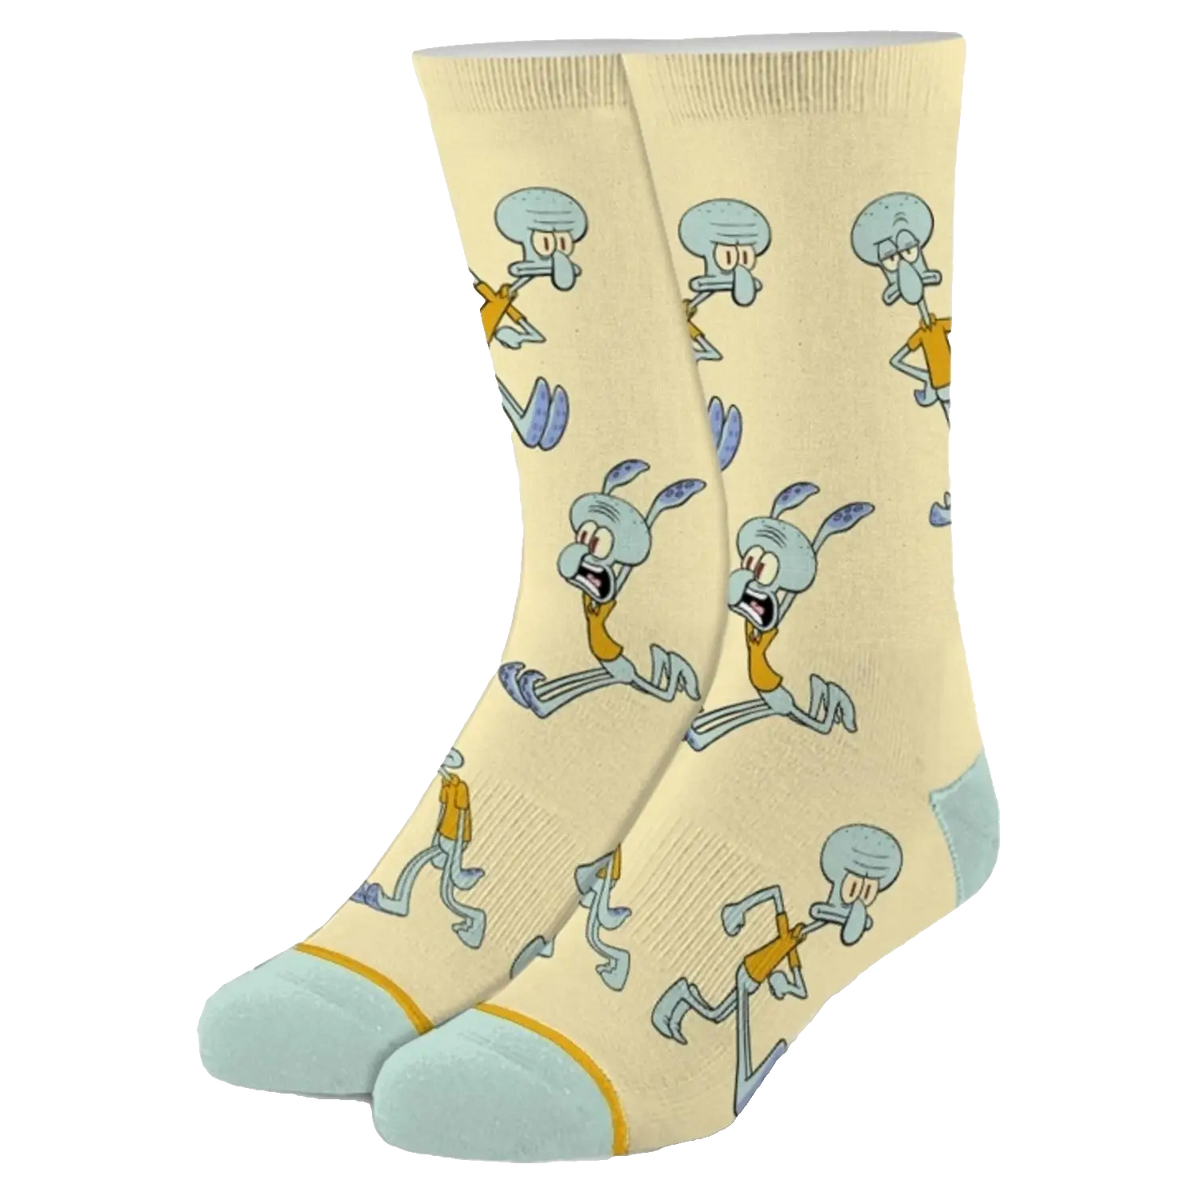 Spongebob - Squidward Socks - Kids - 4-7